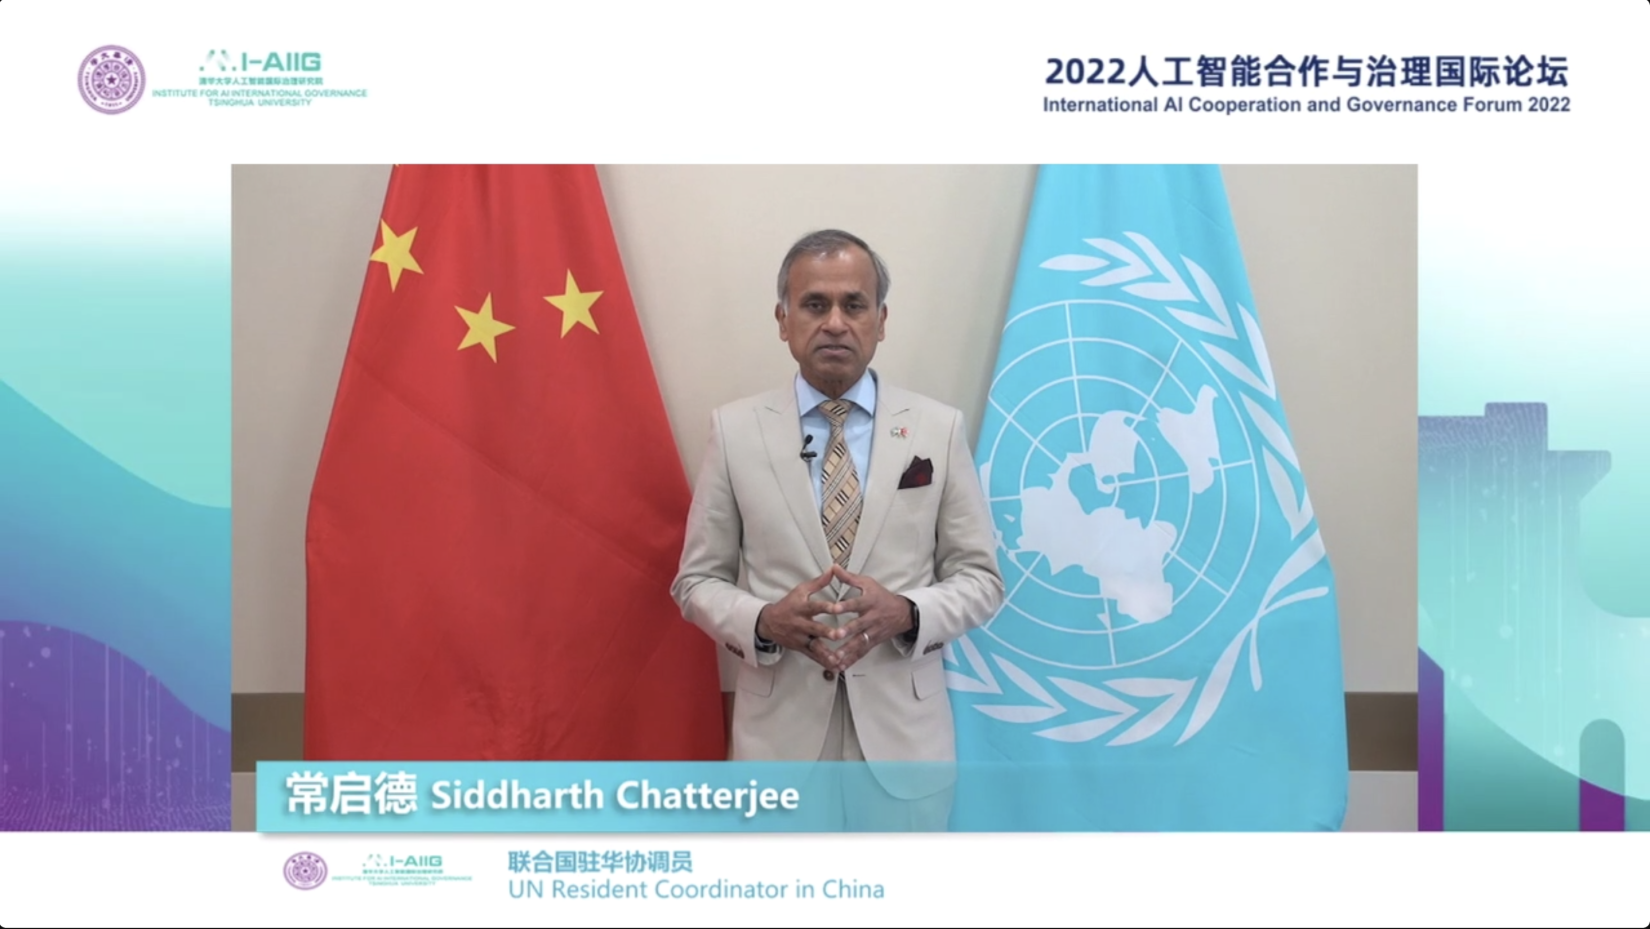 Mr. Siddharth Chatterjee, UN Resident Coordinator in China 